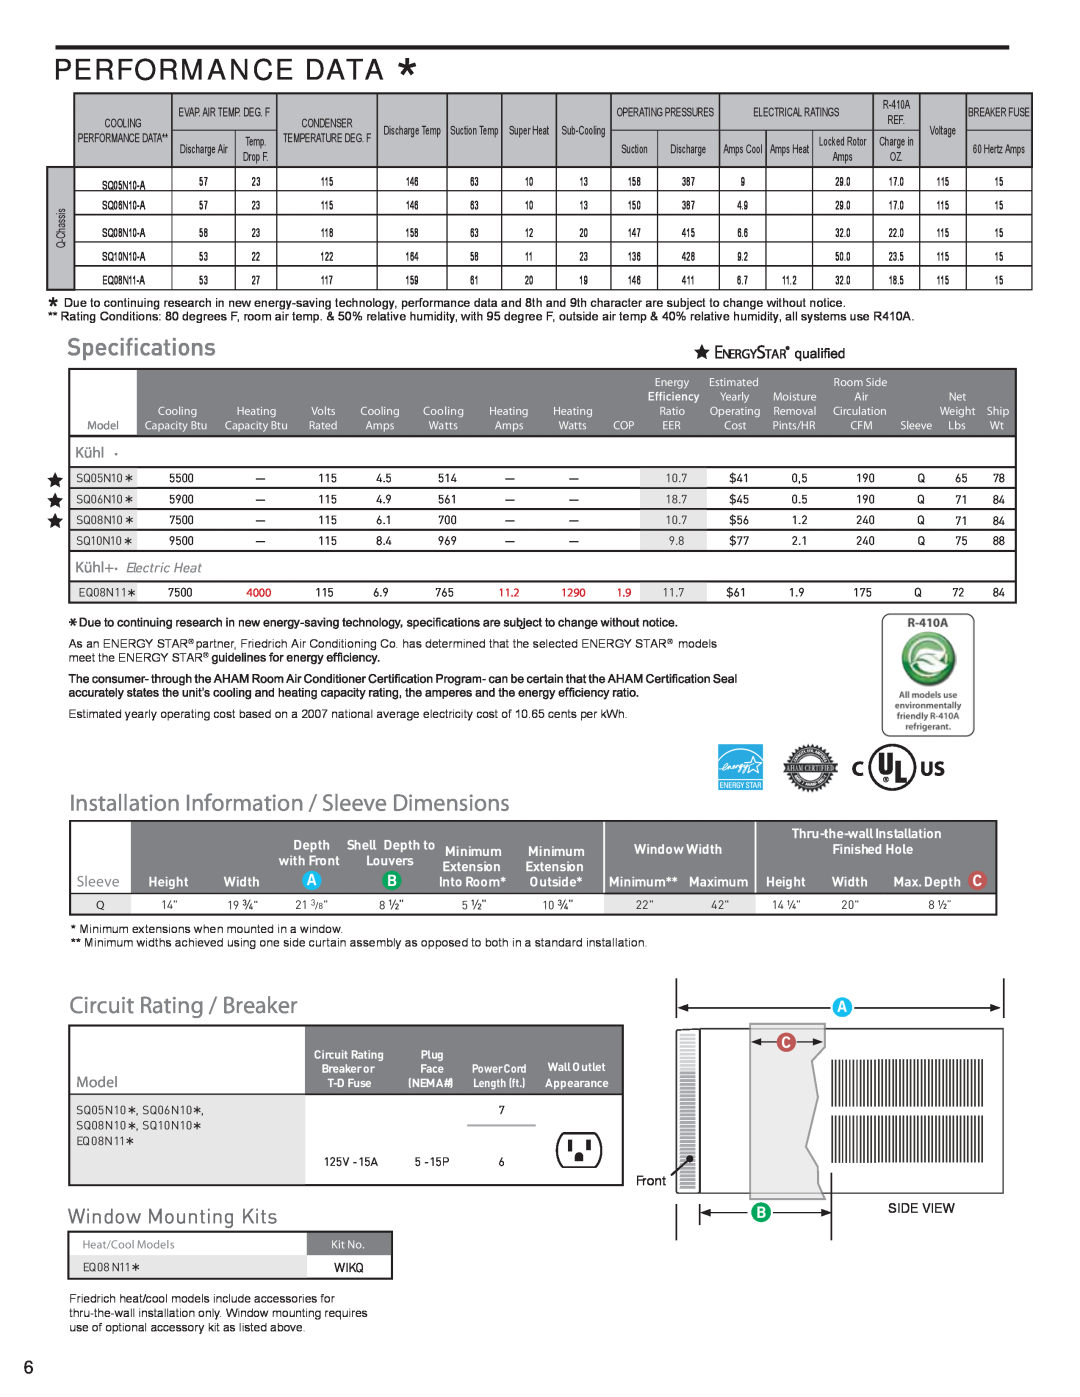 Friedrich SQ05N10 Performance Data, Installation Information / Sleeve Dimensions, Circuit Rating / Breaker, C Us, Kühl 